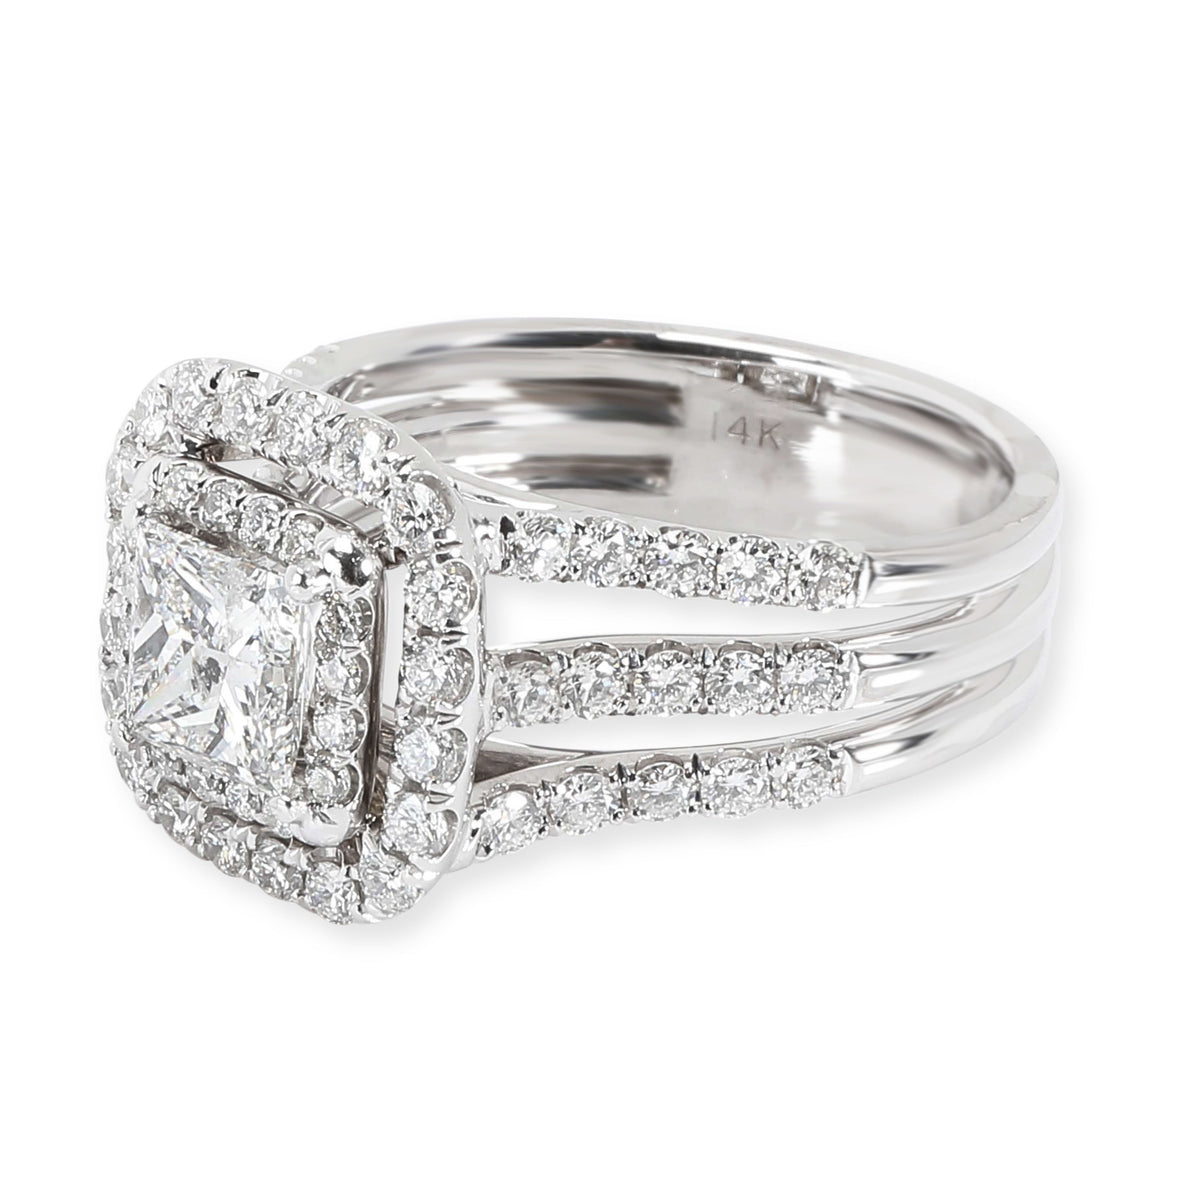 Halo Princess Cut Diamond Engagement Ring in 14K White Gold 2.25 CTW